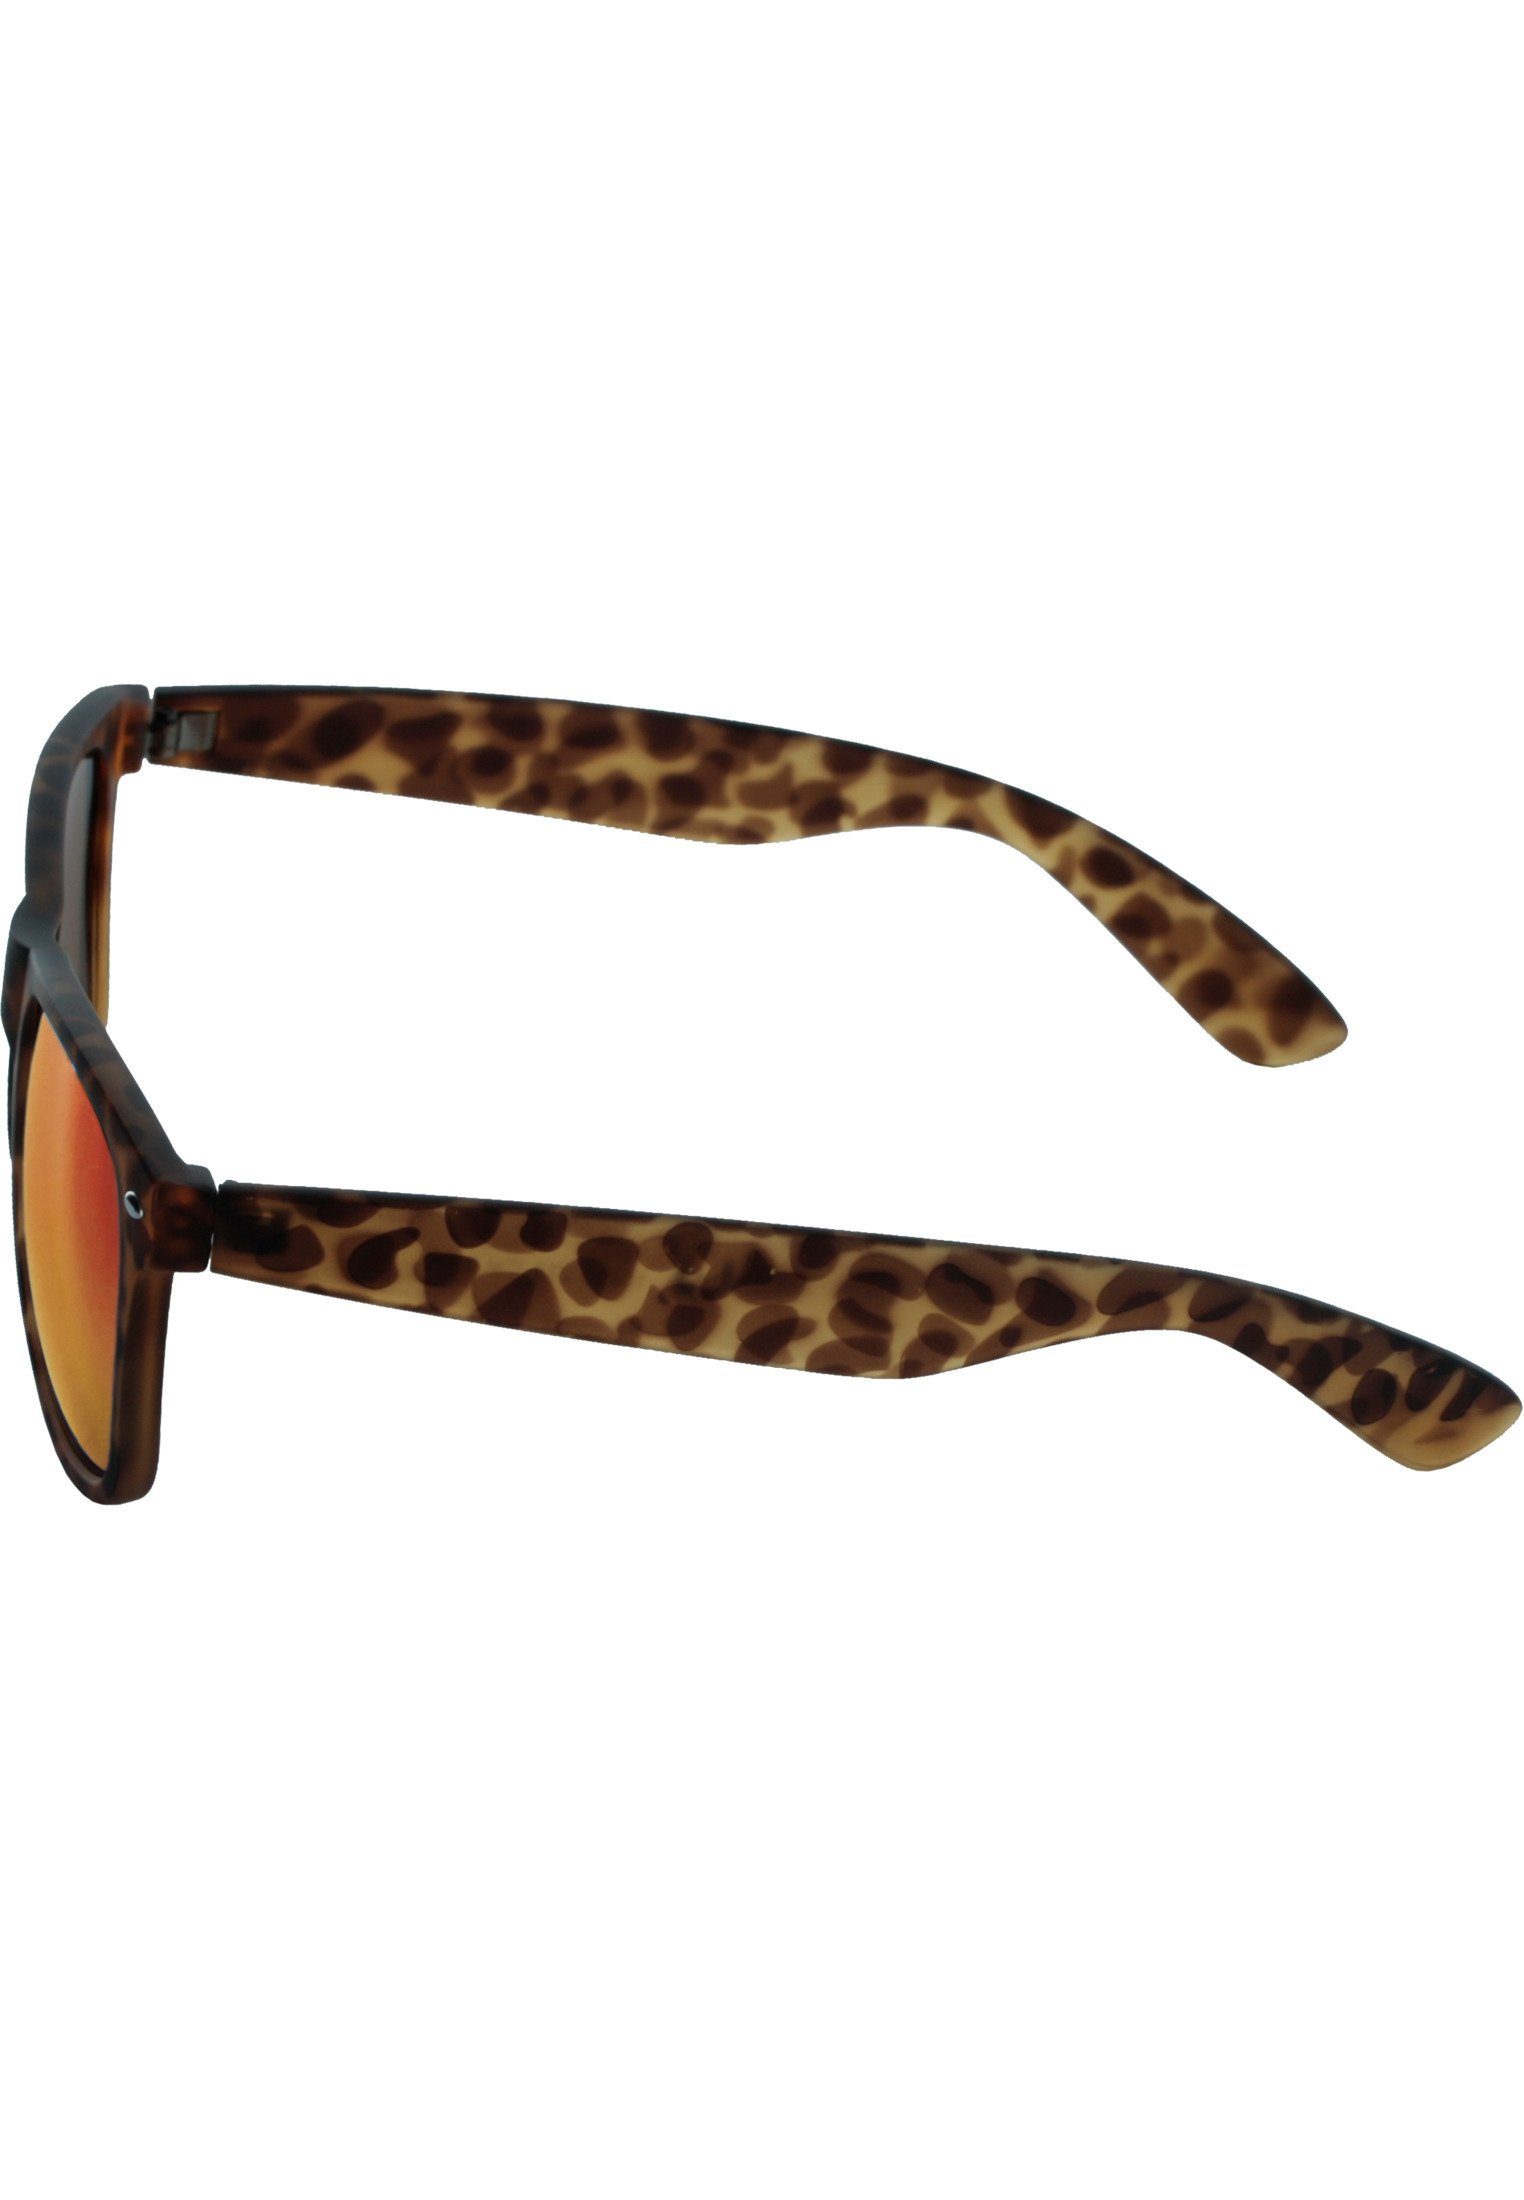 MSTRDS Sonnenbrille Accessoires Sunglasses amber/orange Likoma Mirror